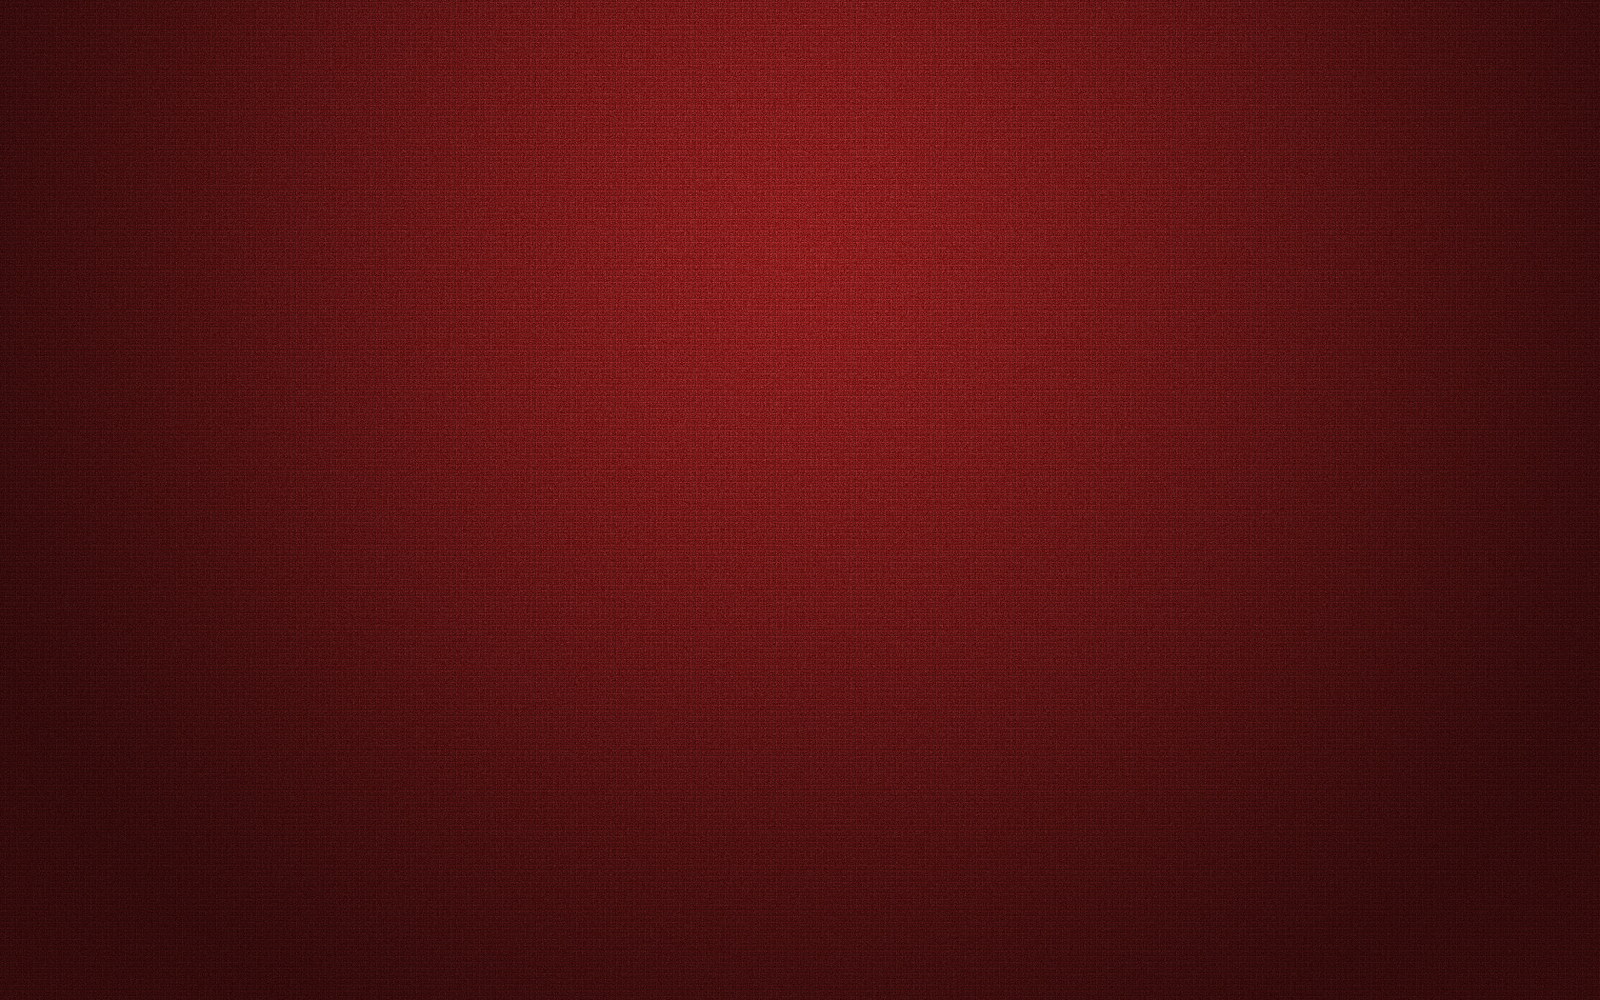 Simple Dark Red Solid Color Wallpaper Background Solid Color Red Pure Red  Background Image for Free Download